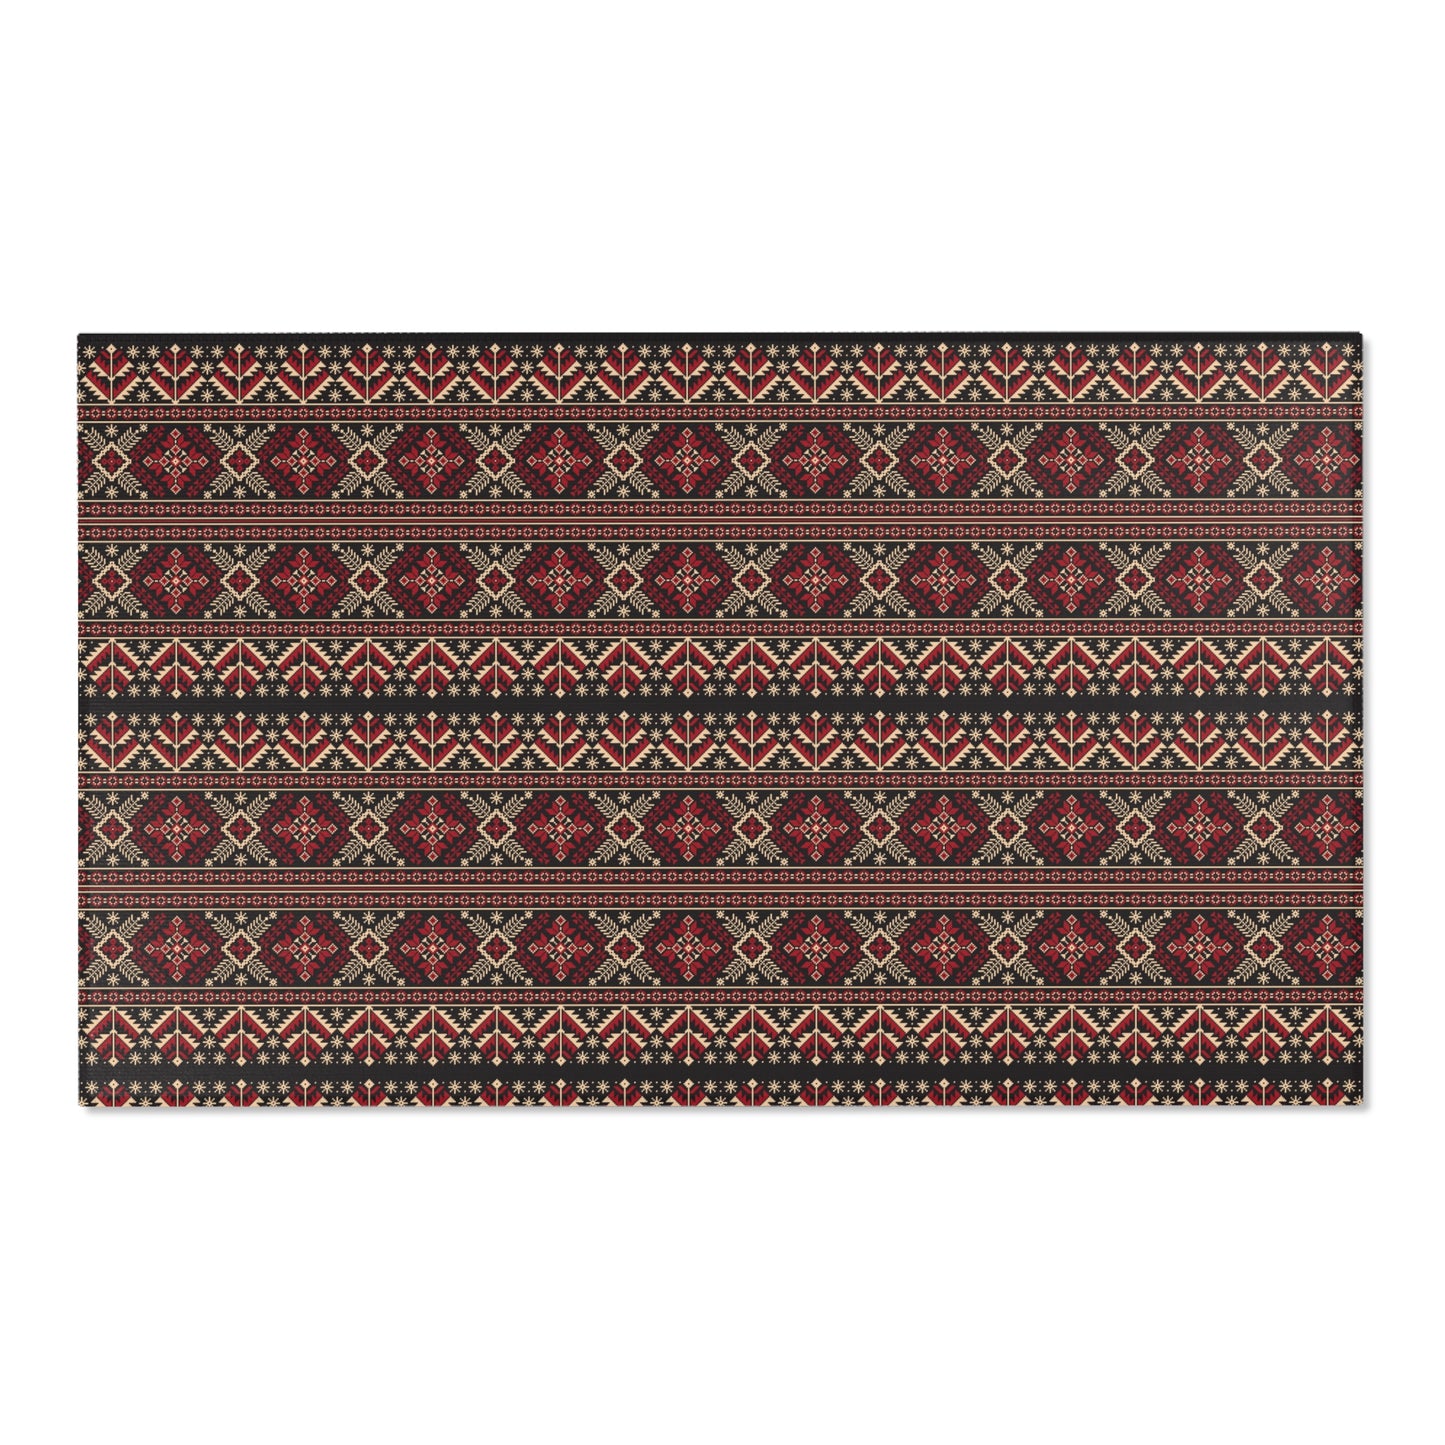 Niccie's Luxurious Arabic Pattern Area Rug Oriental Carpets